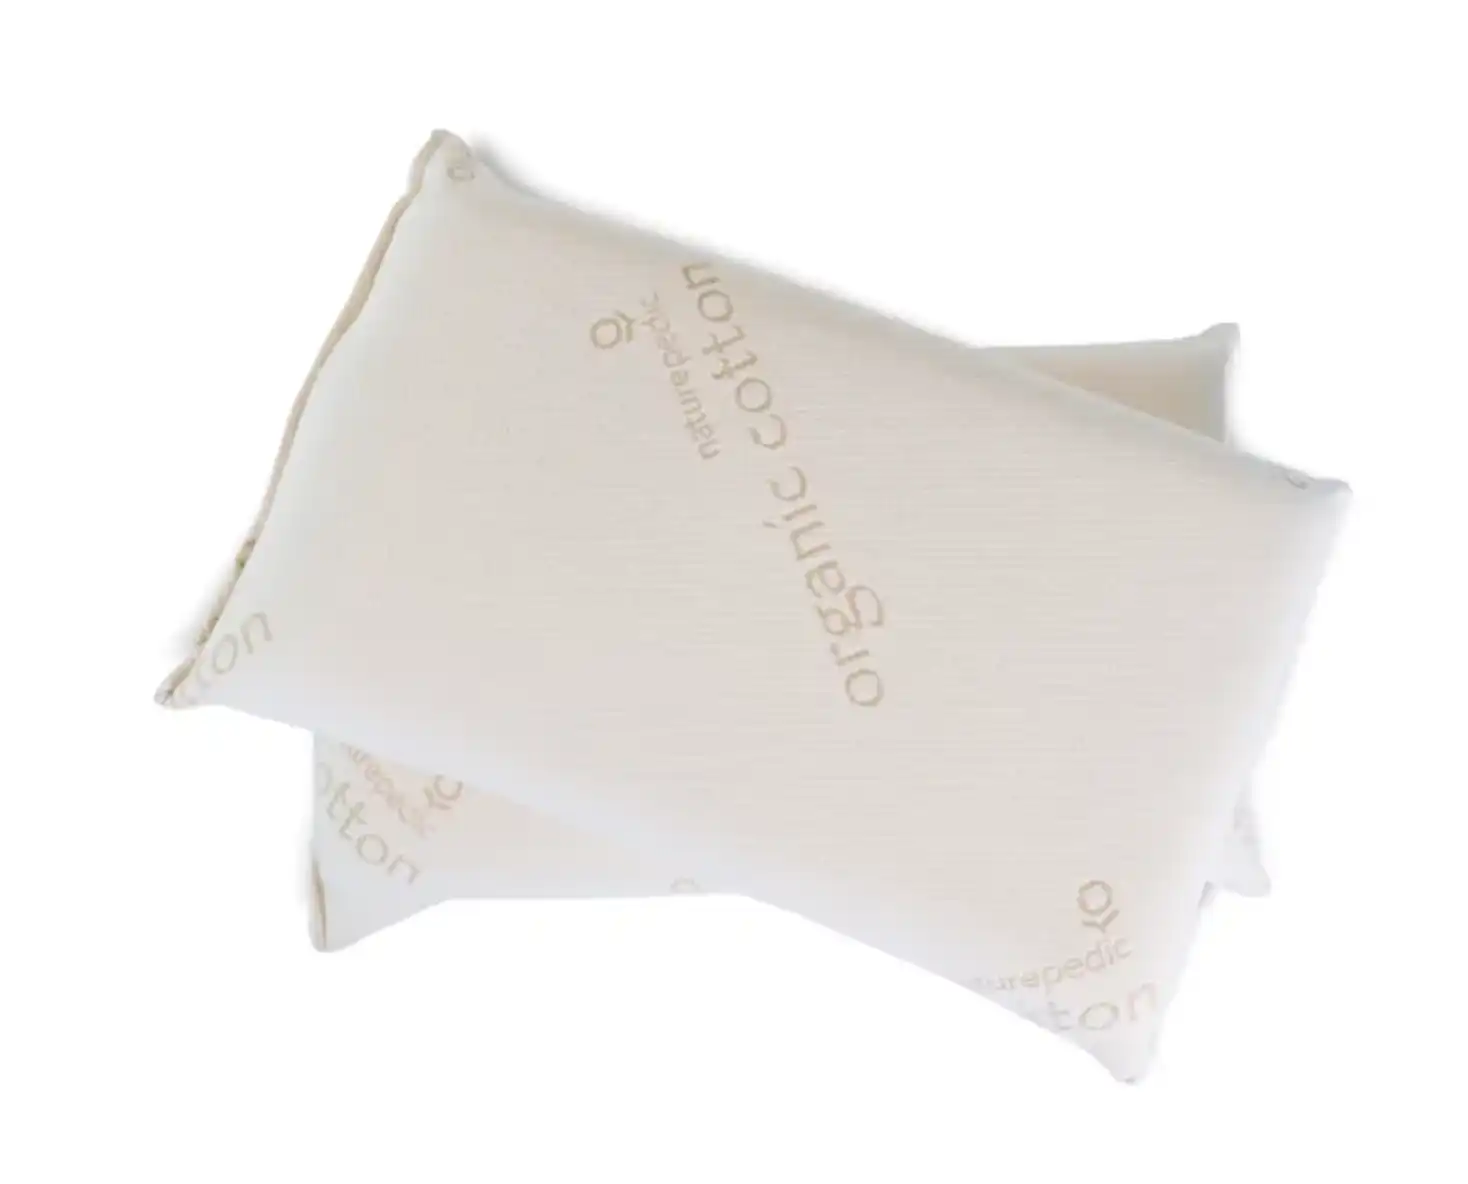 Naturepedic Solid Organic Latex Pillow